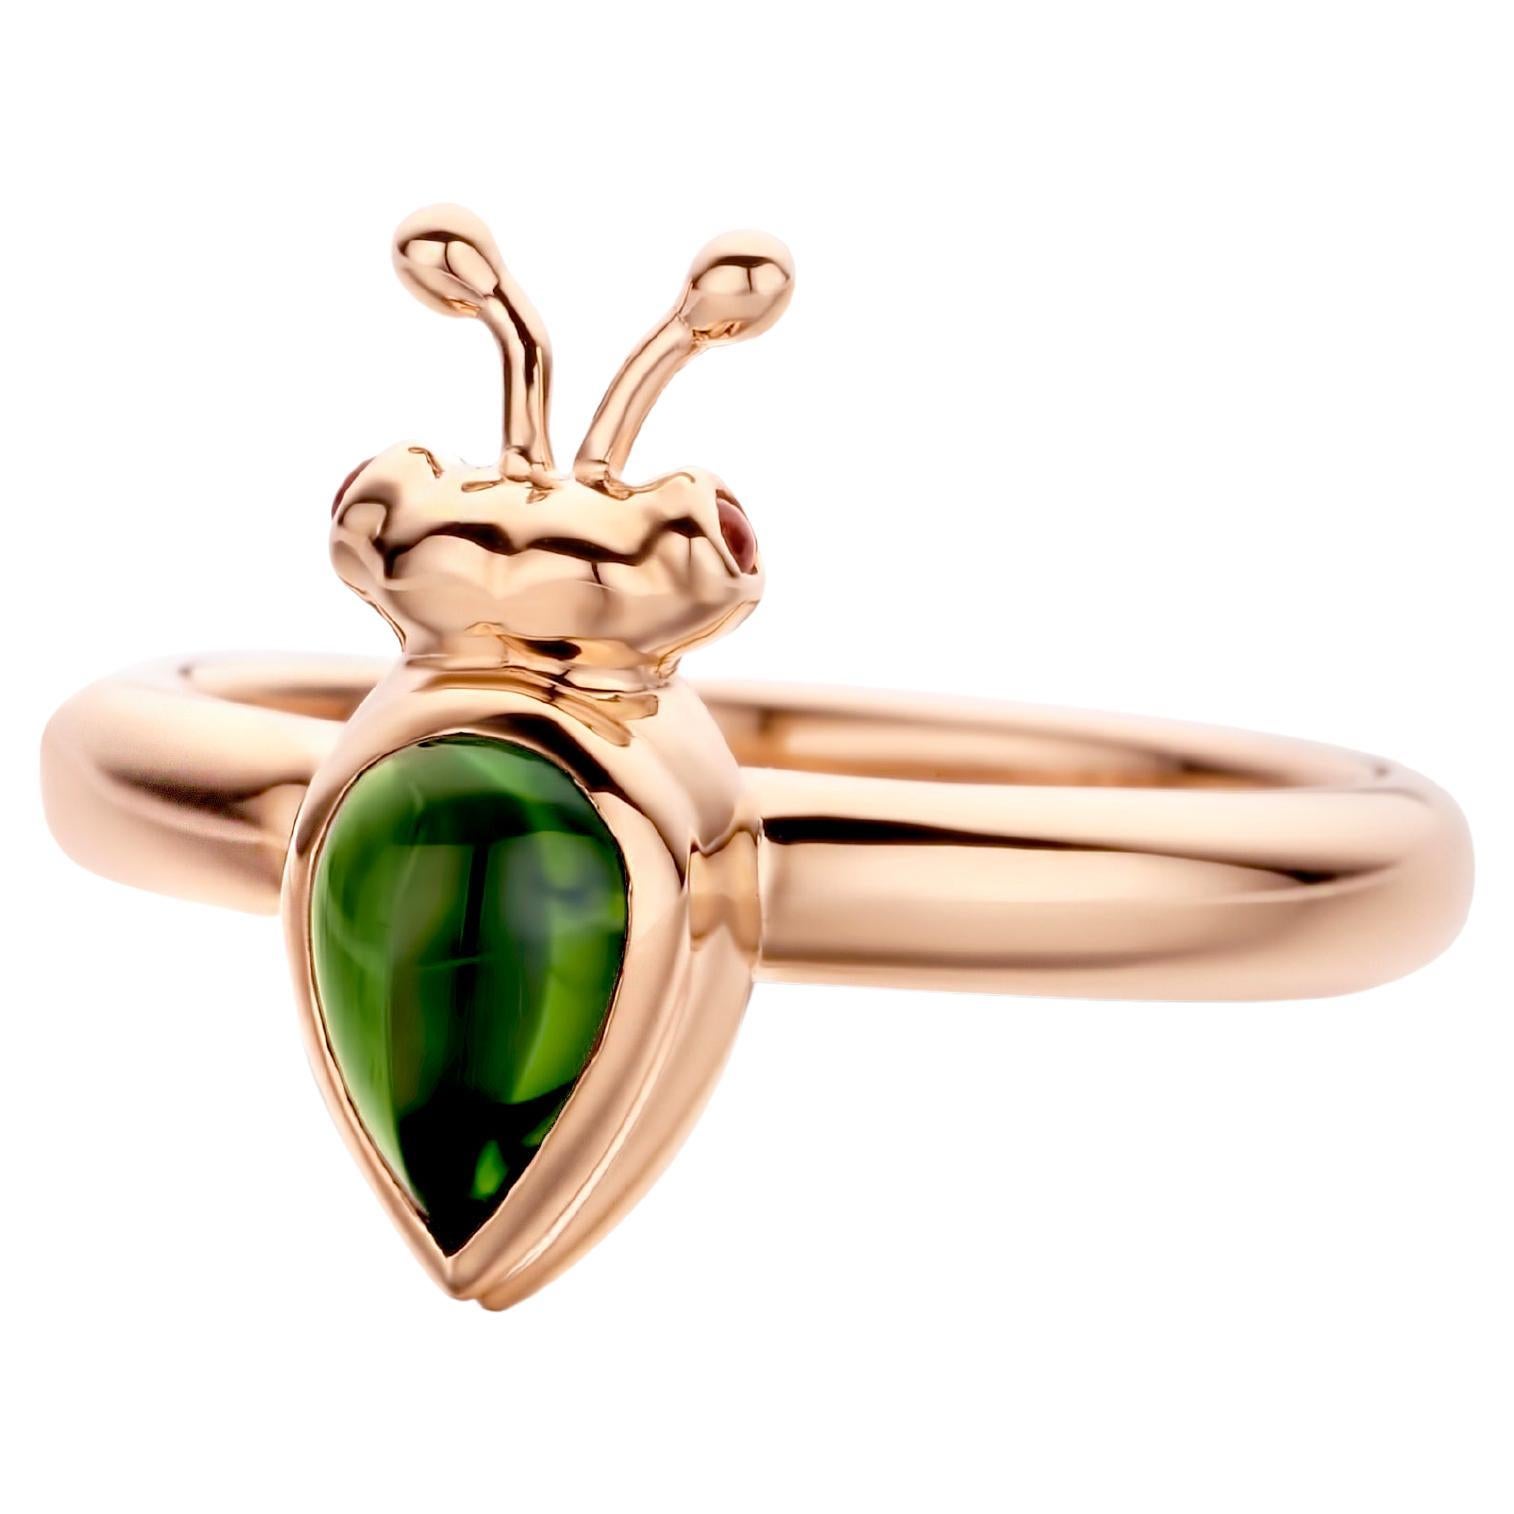 Moderner Ring aus 18 Karat Roségold mit grünem Turmalin